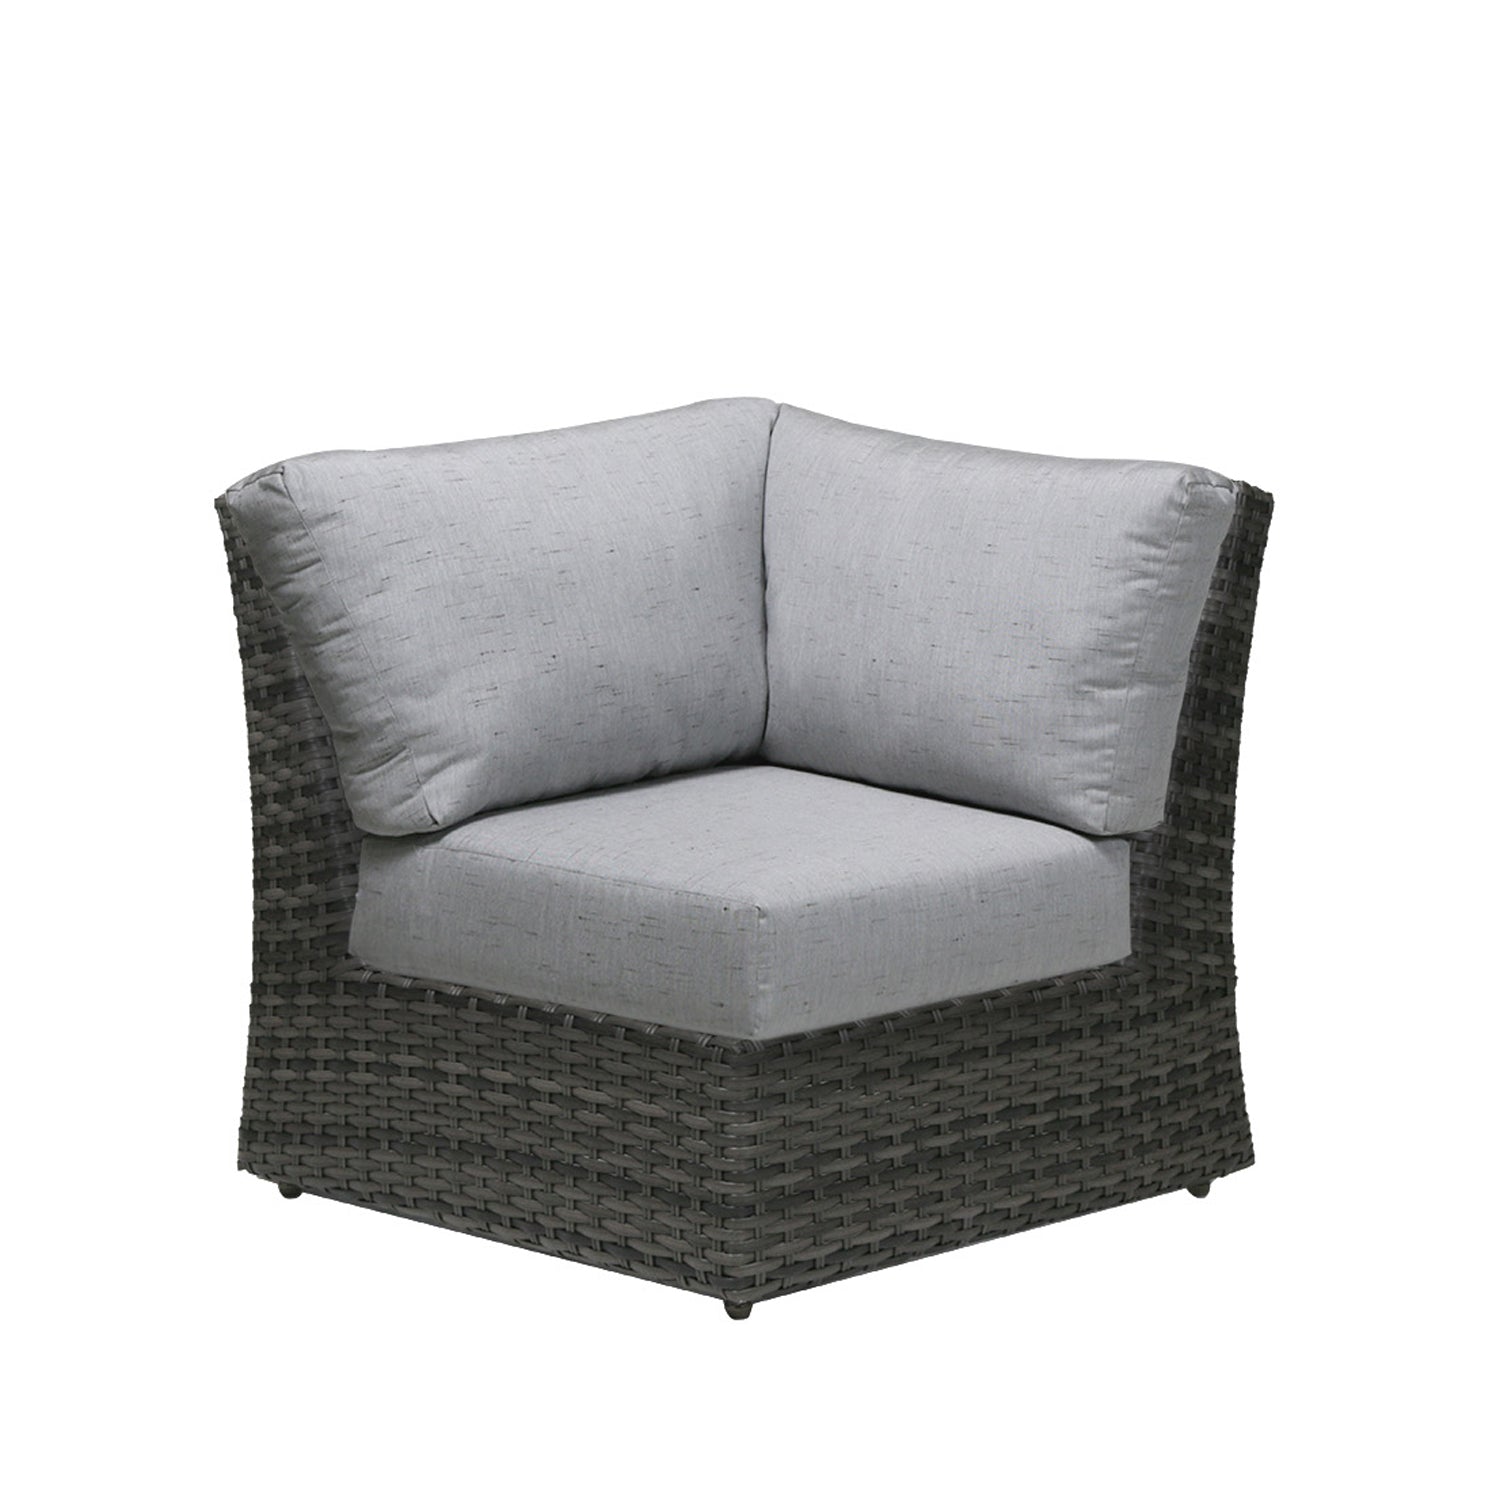 Portfino Sectional - Corner Chair